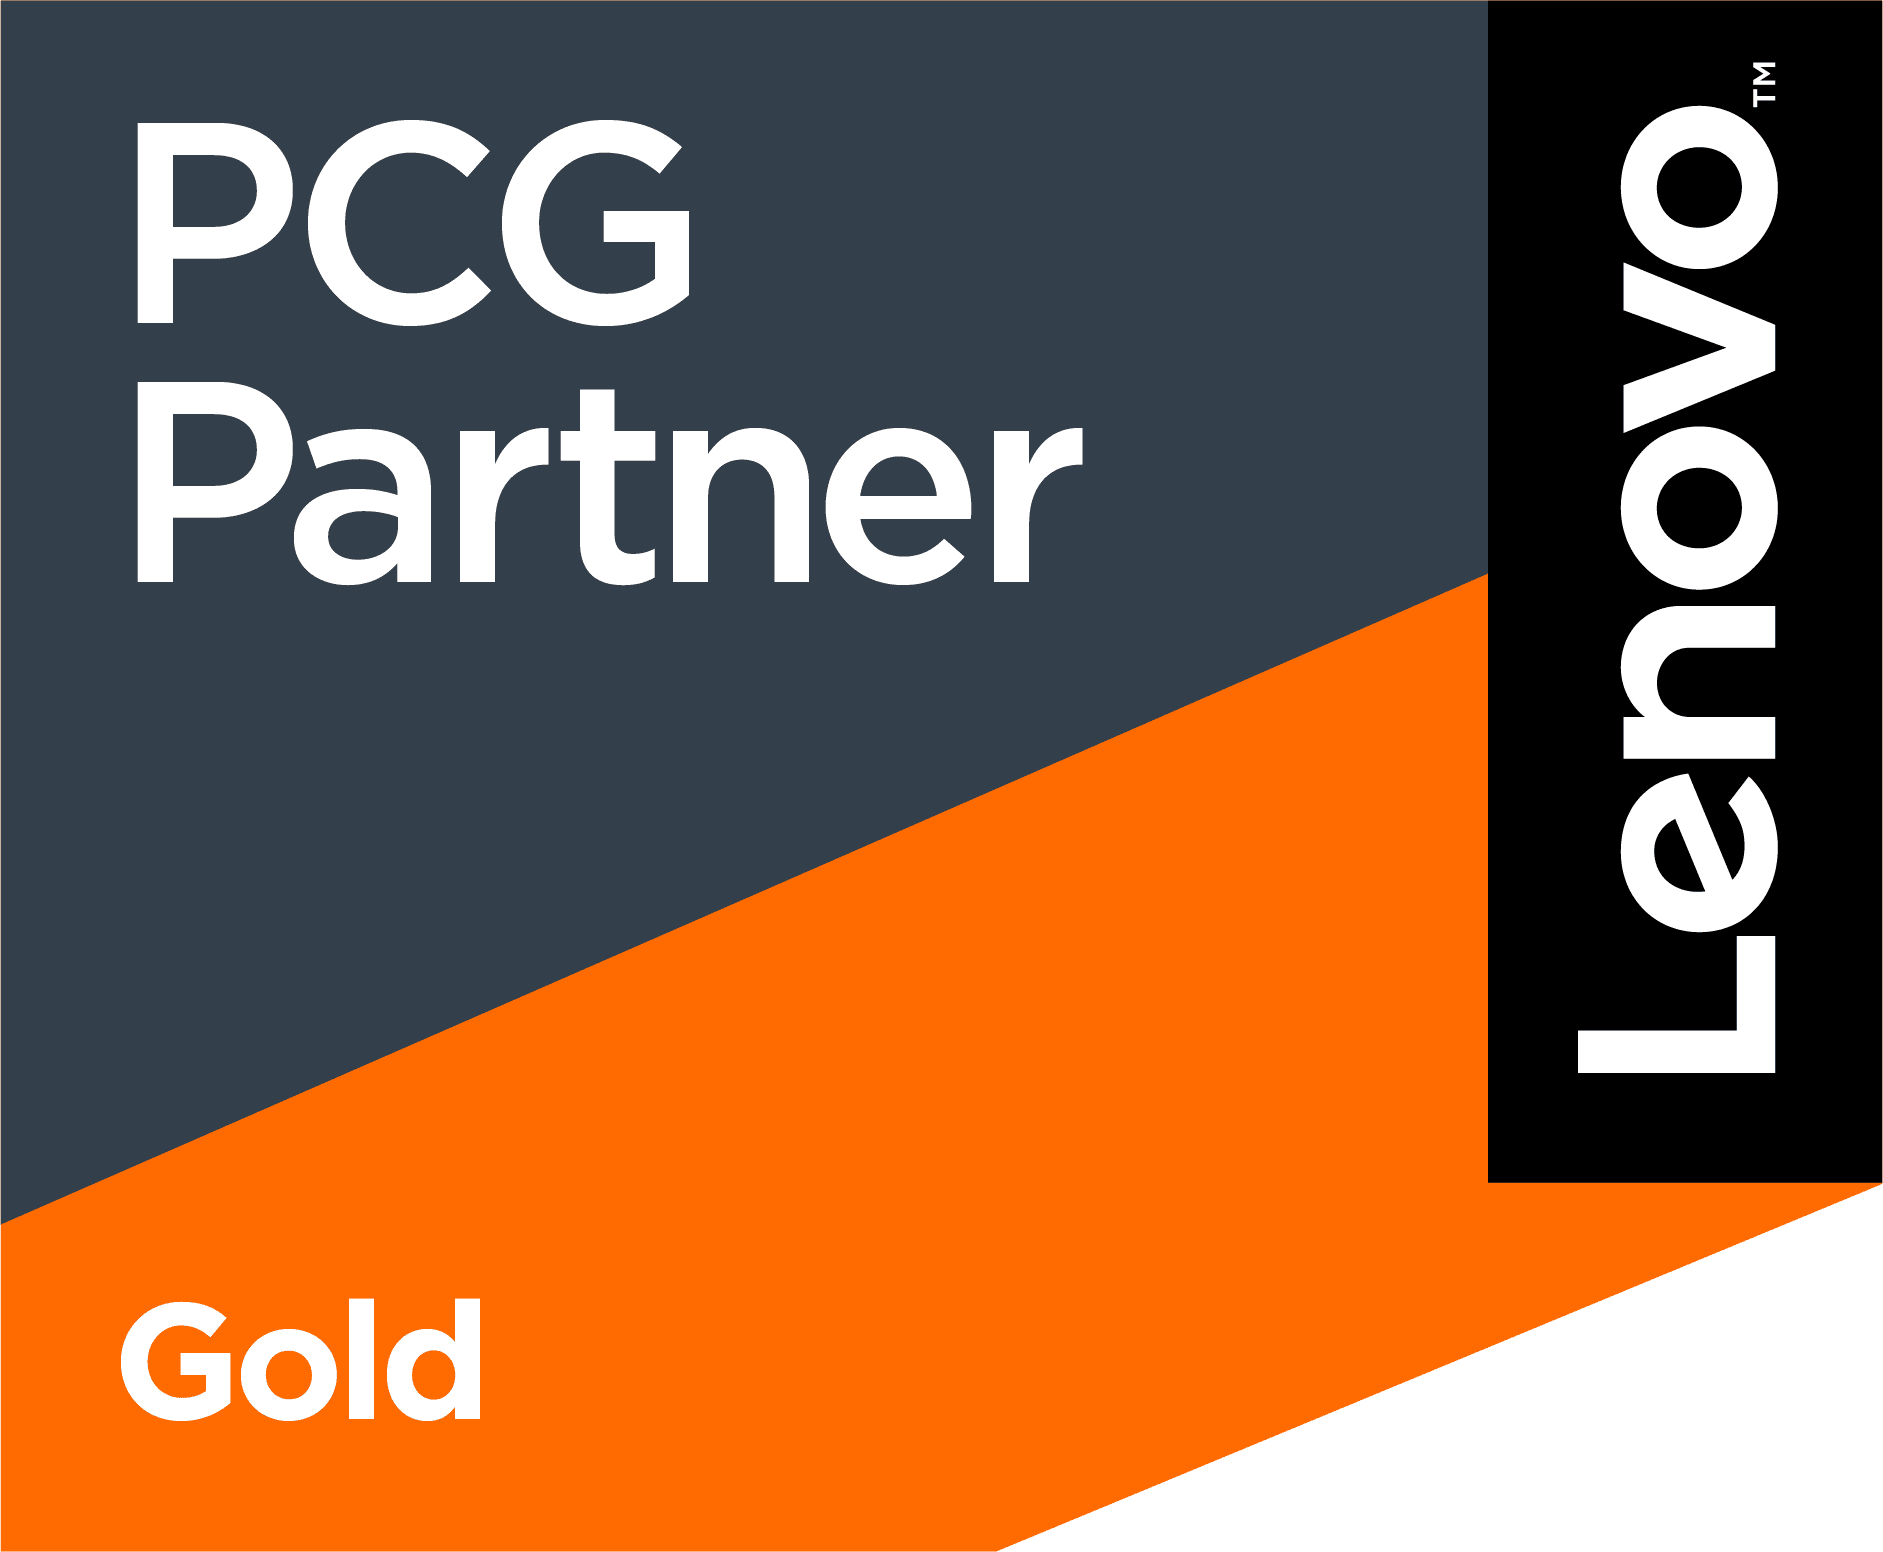 Lenovo Premium Business Partner